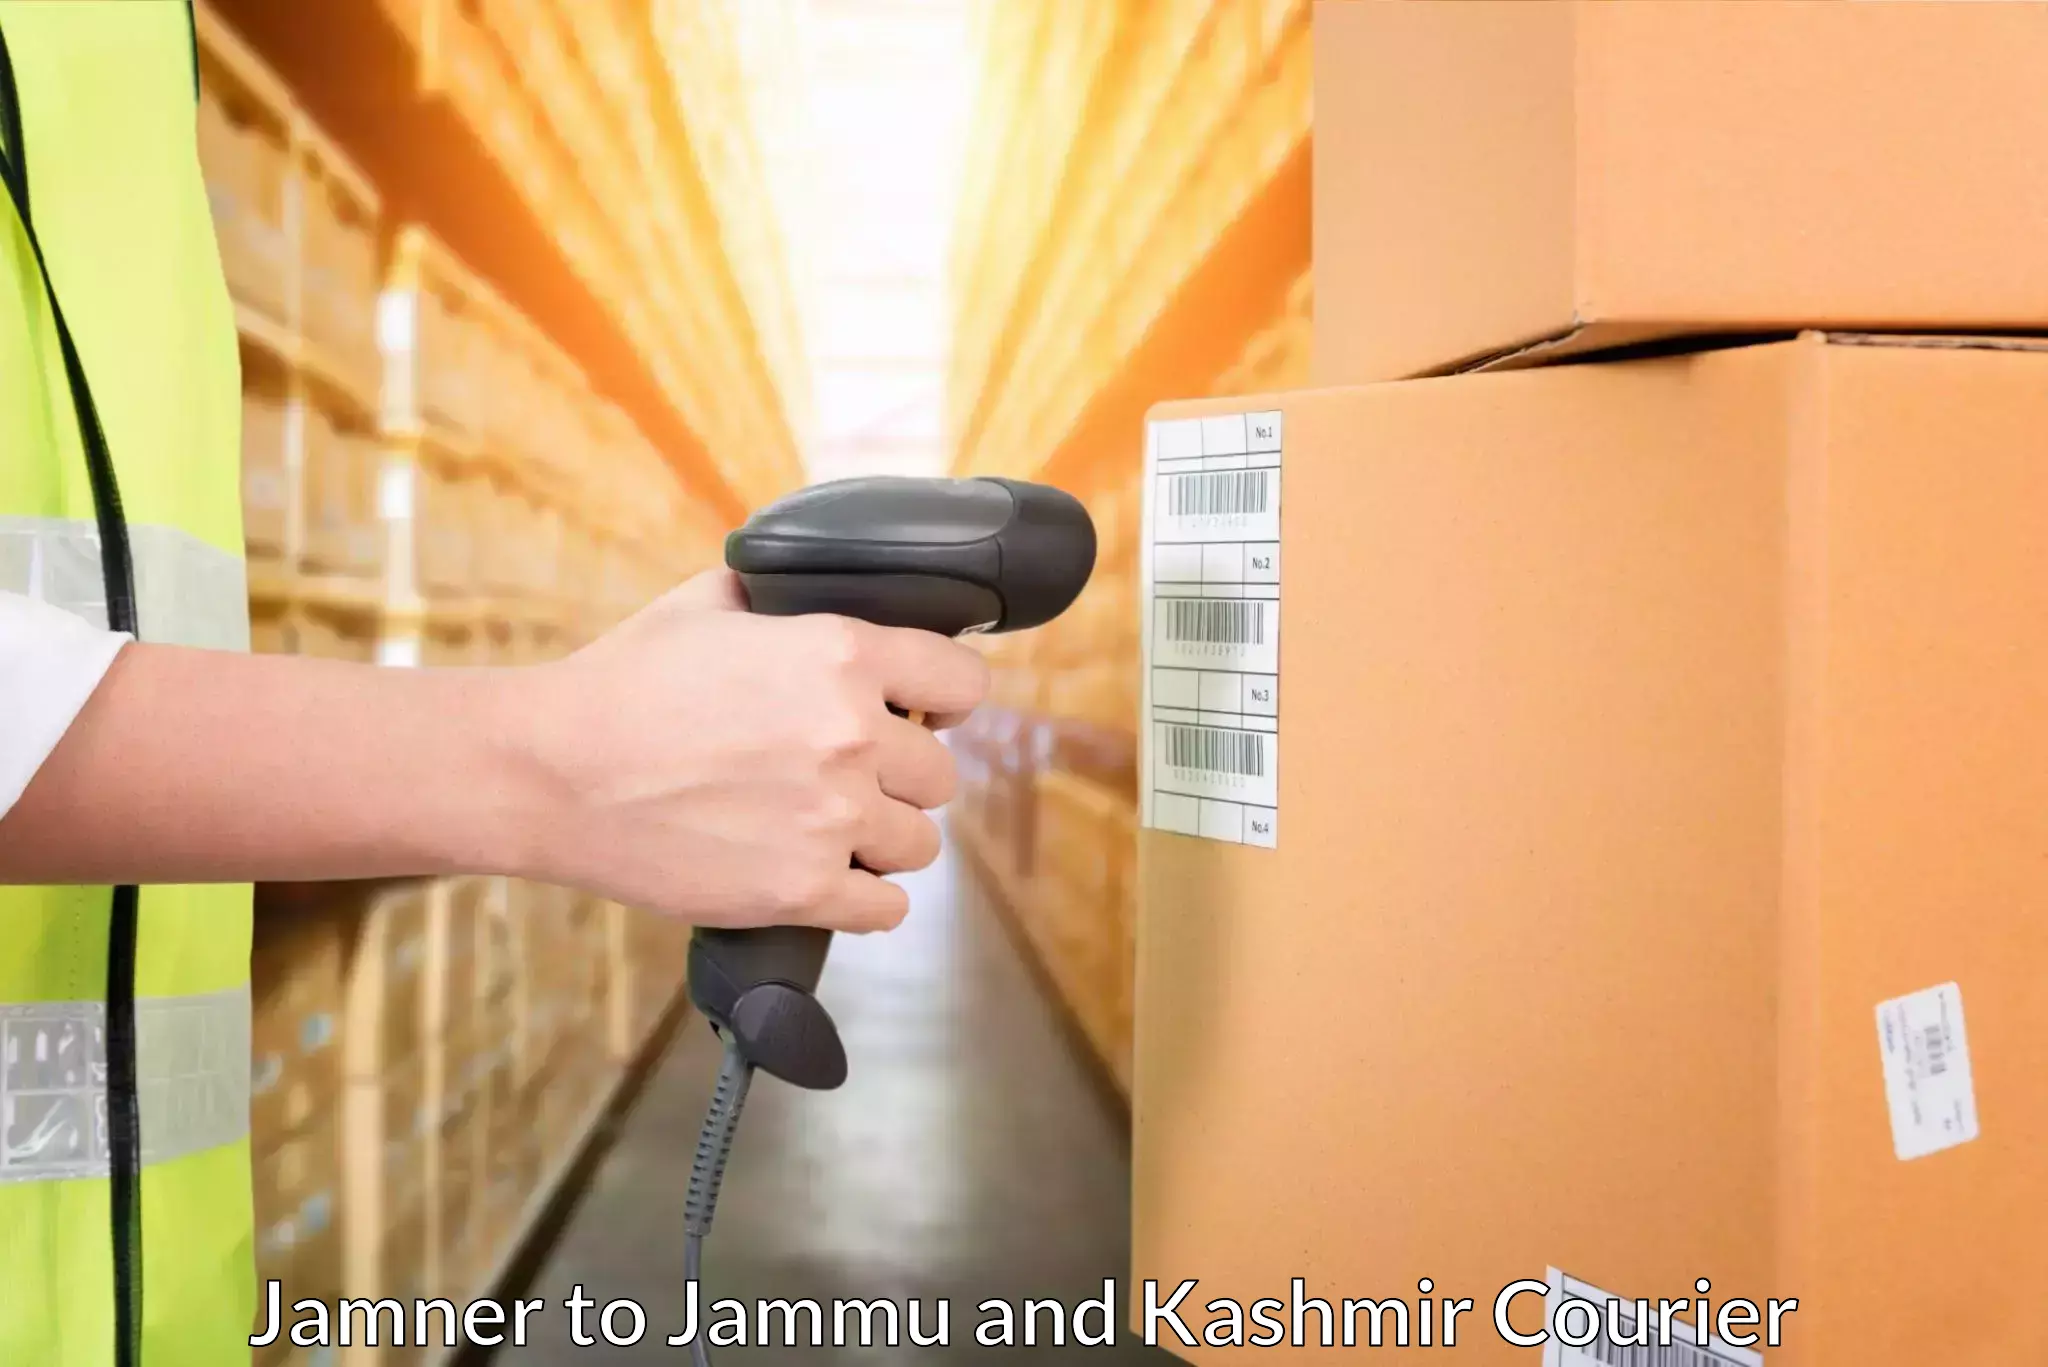 Urgent courier needs Jamner to Bhaderwah